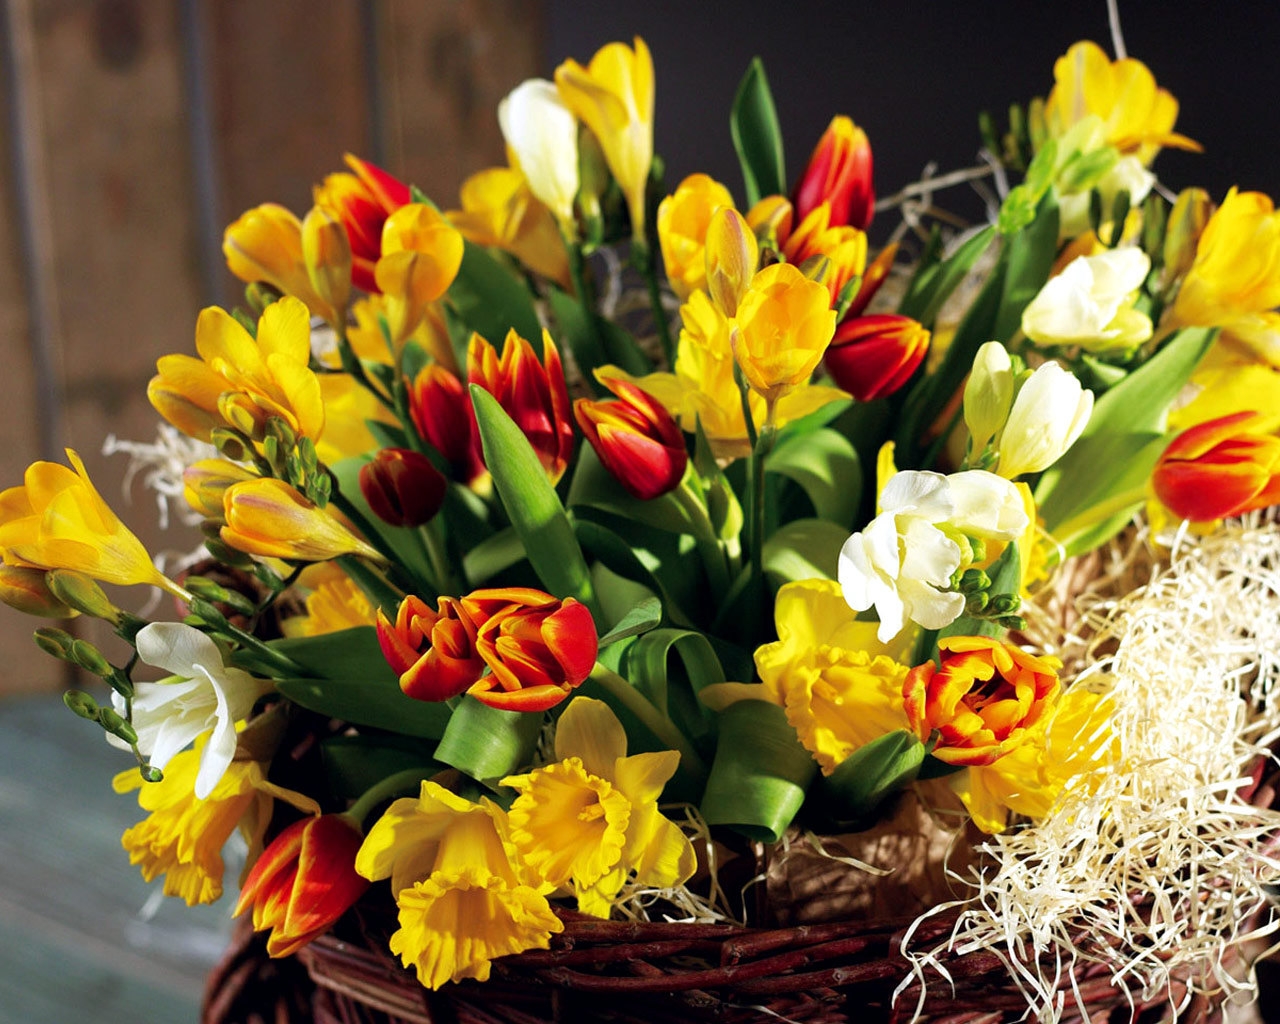 flowers-tulips-yellow-spring-shopping-daffodils-flower-plant-tulip-flora-chic-land-plant-flowe...jpg